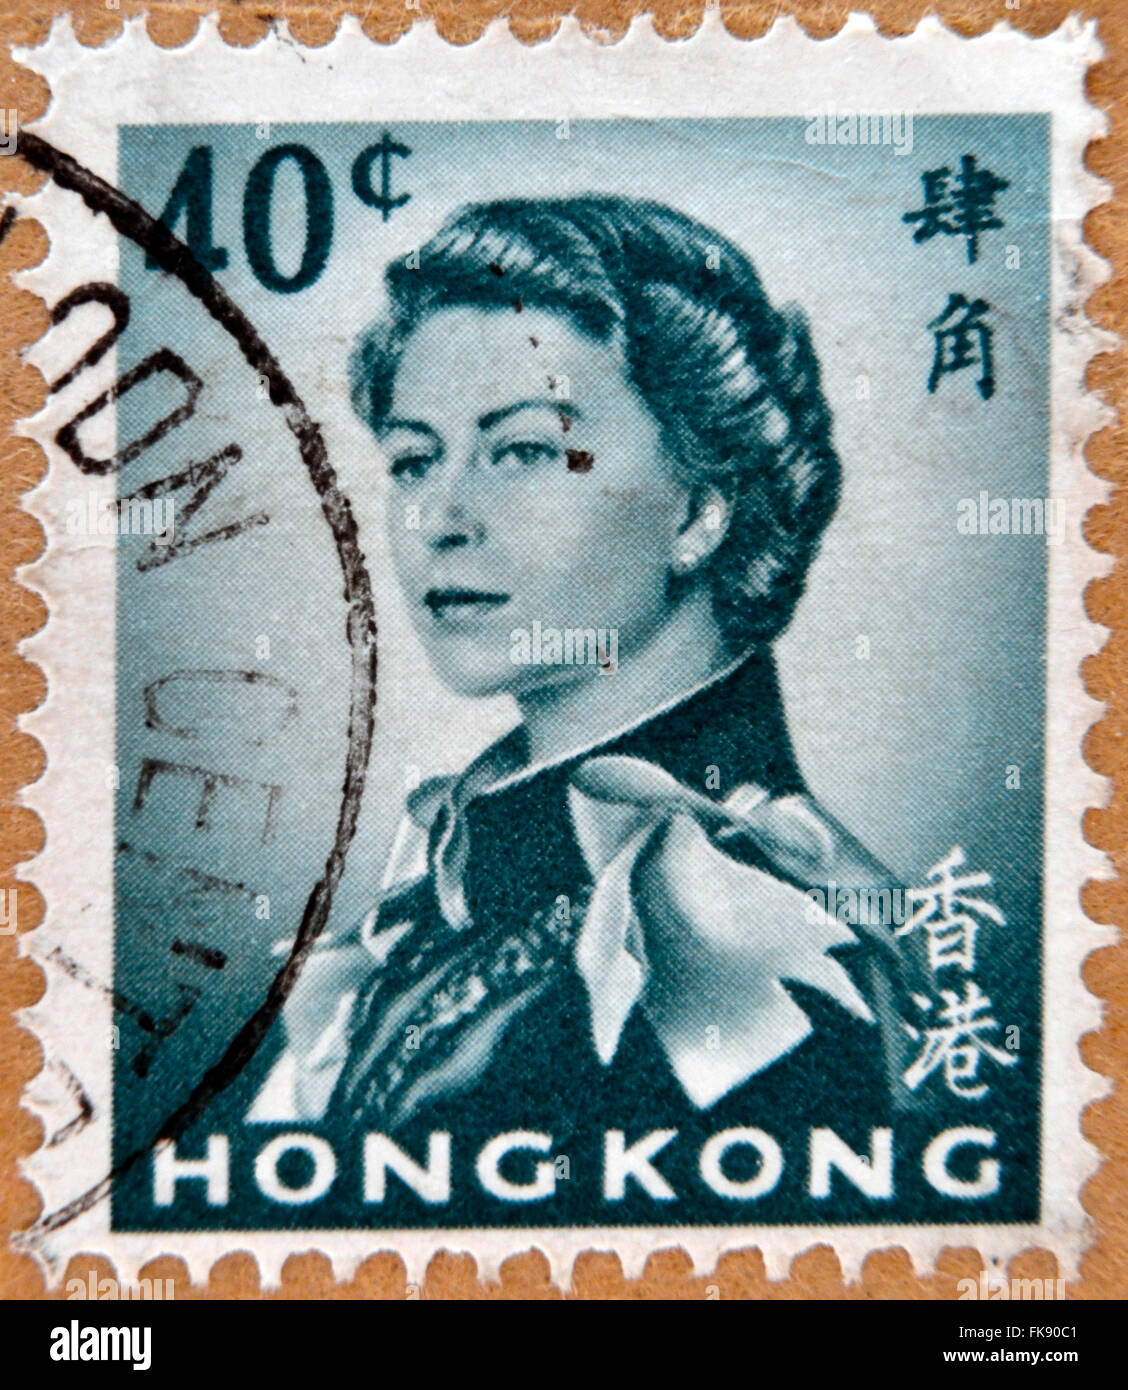 HONG KONG - circa 1972 : timbre imprimé à Hong Kong montre la reine Elizabeth II, vers 1972 Banque D'Images